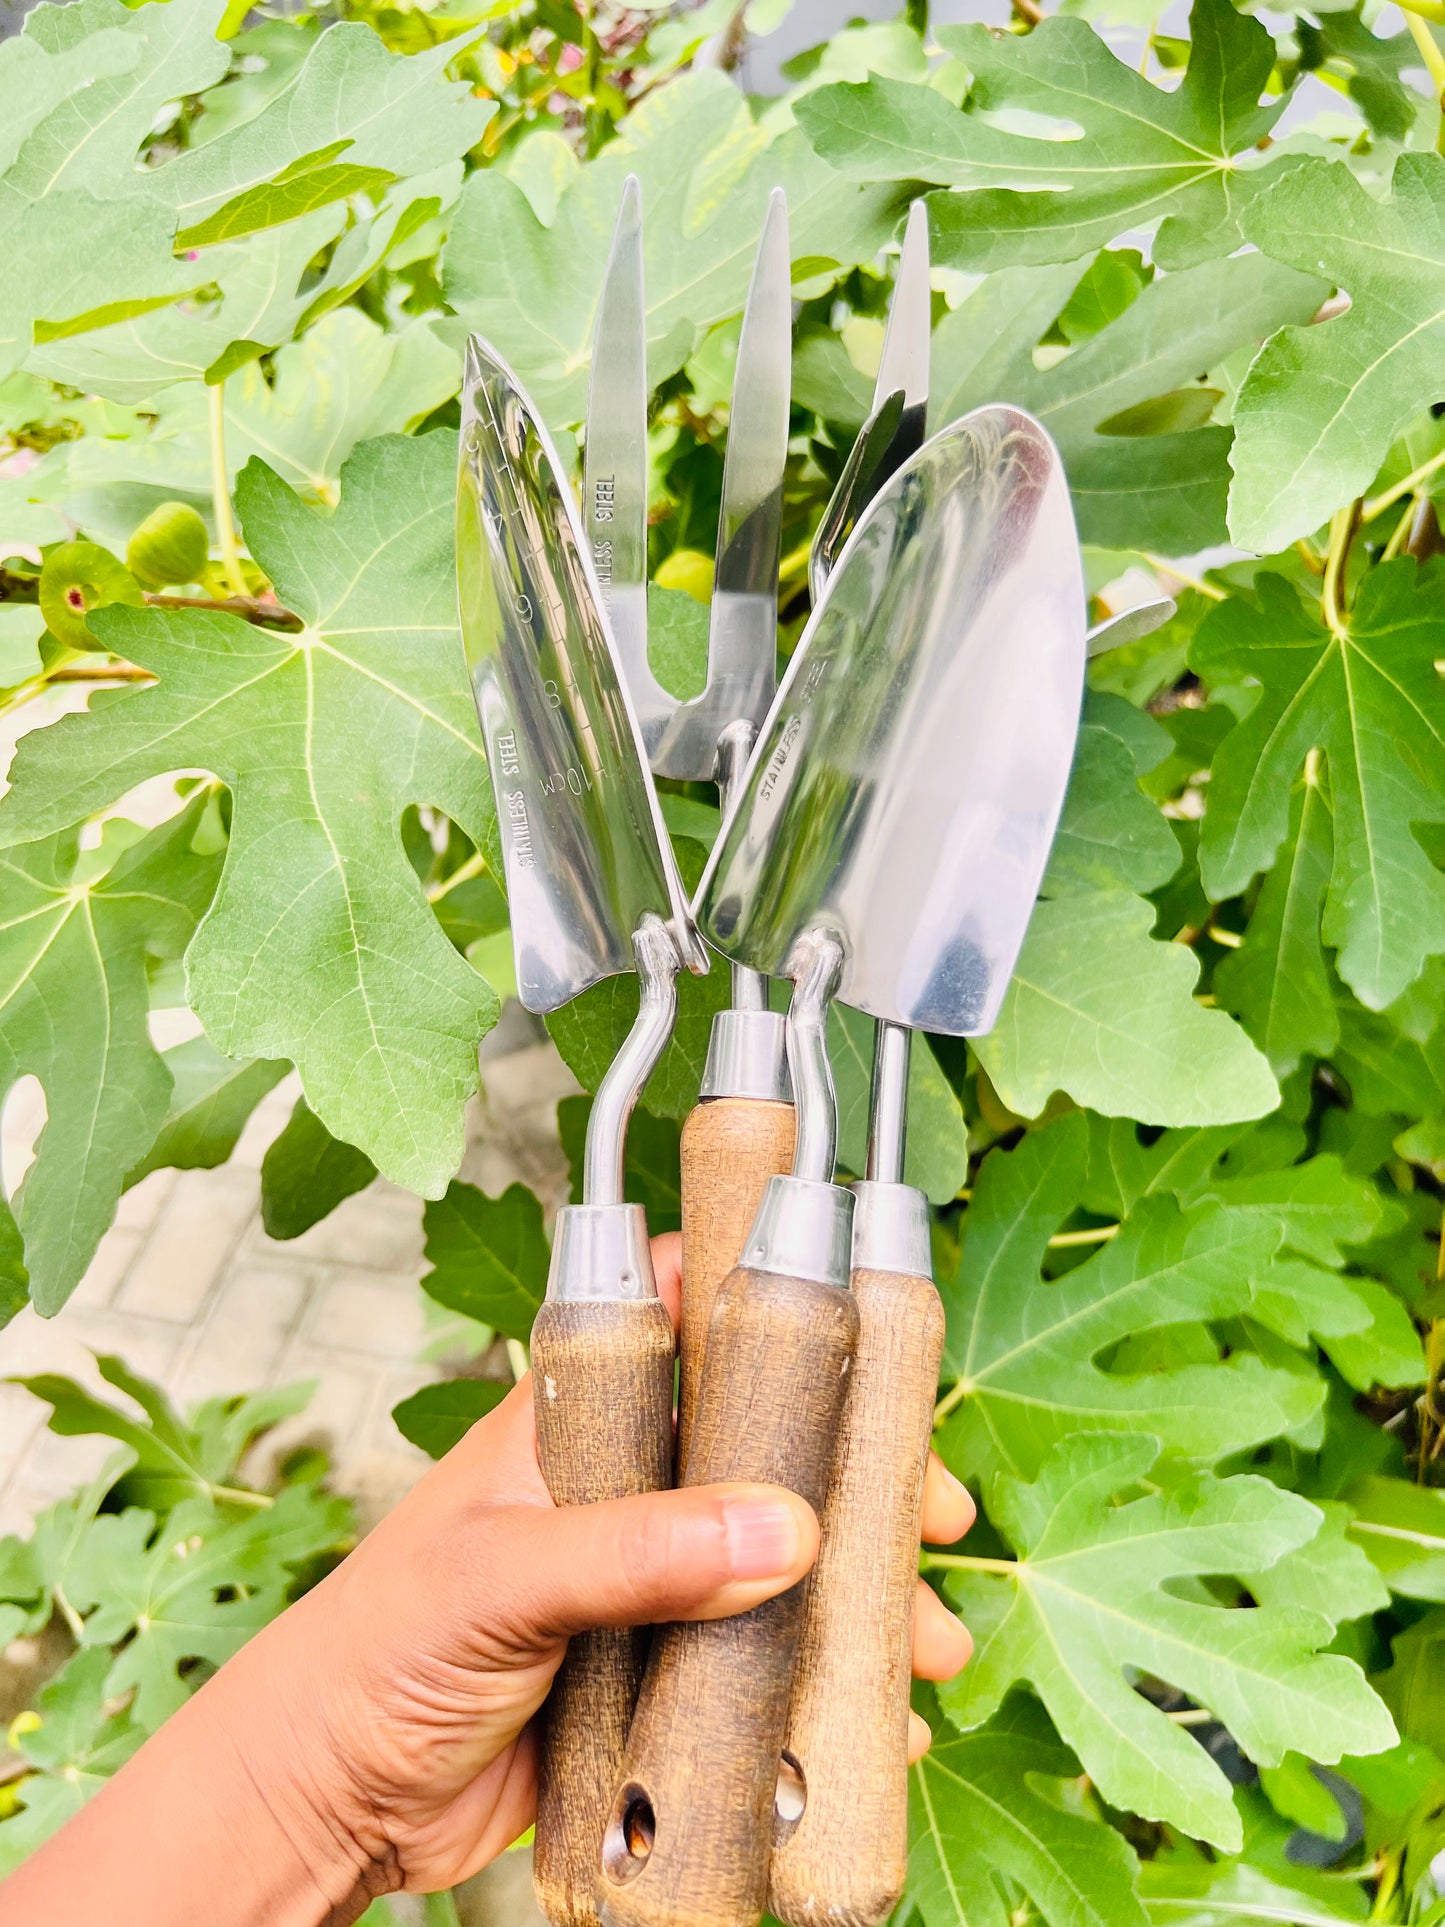 Stainless steel Garden tools